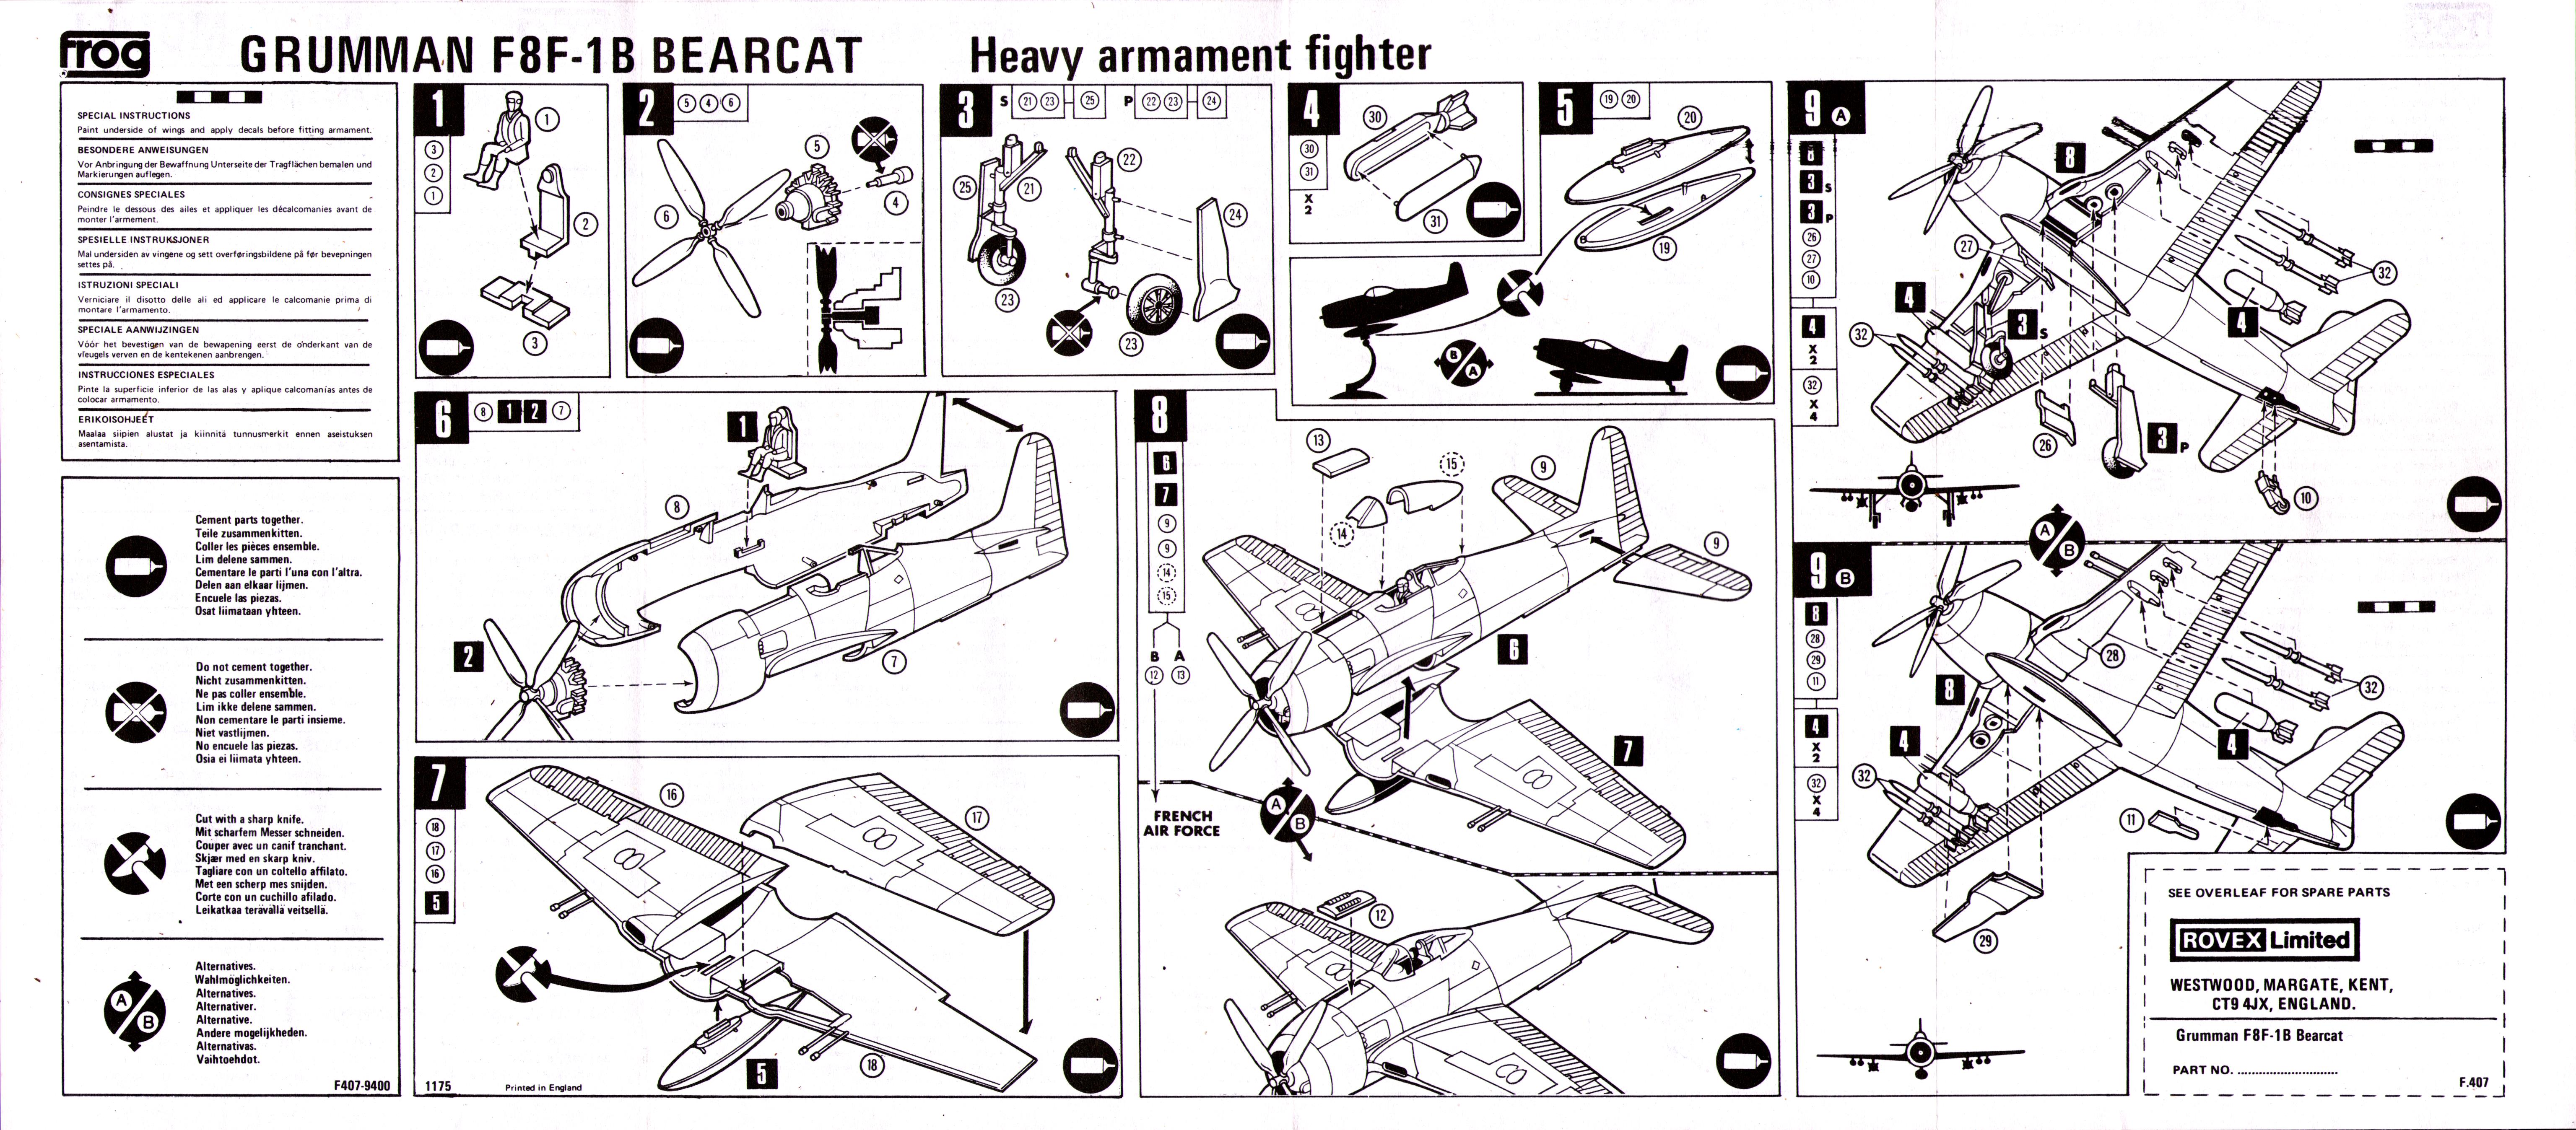 FROG F407 Grumman F8F-1B Bearcat, Rovex Models & Hobbies, summer 1976, инструкция по сборке